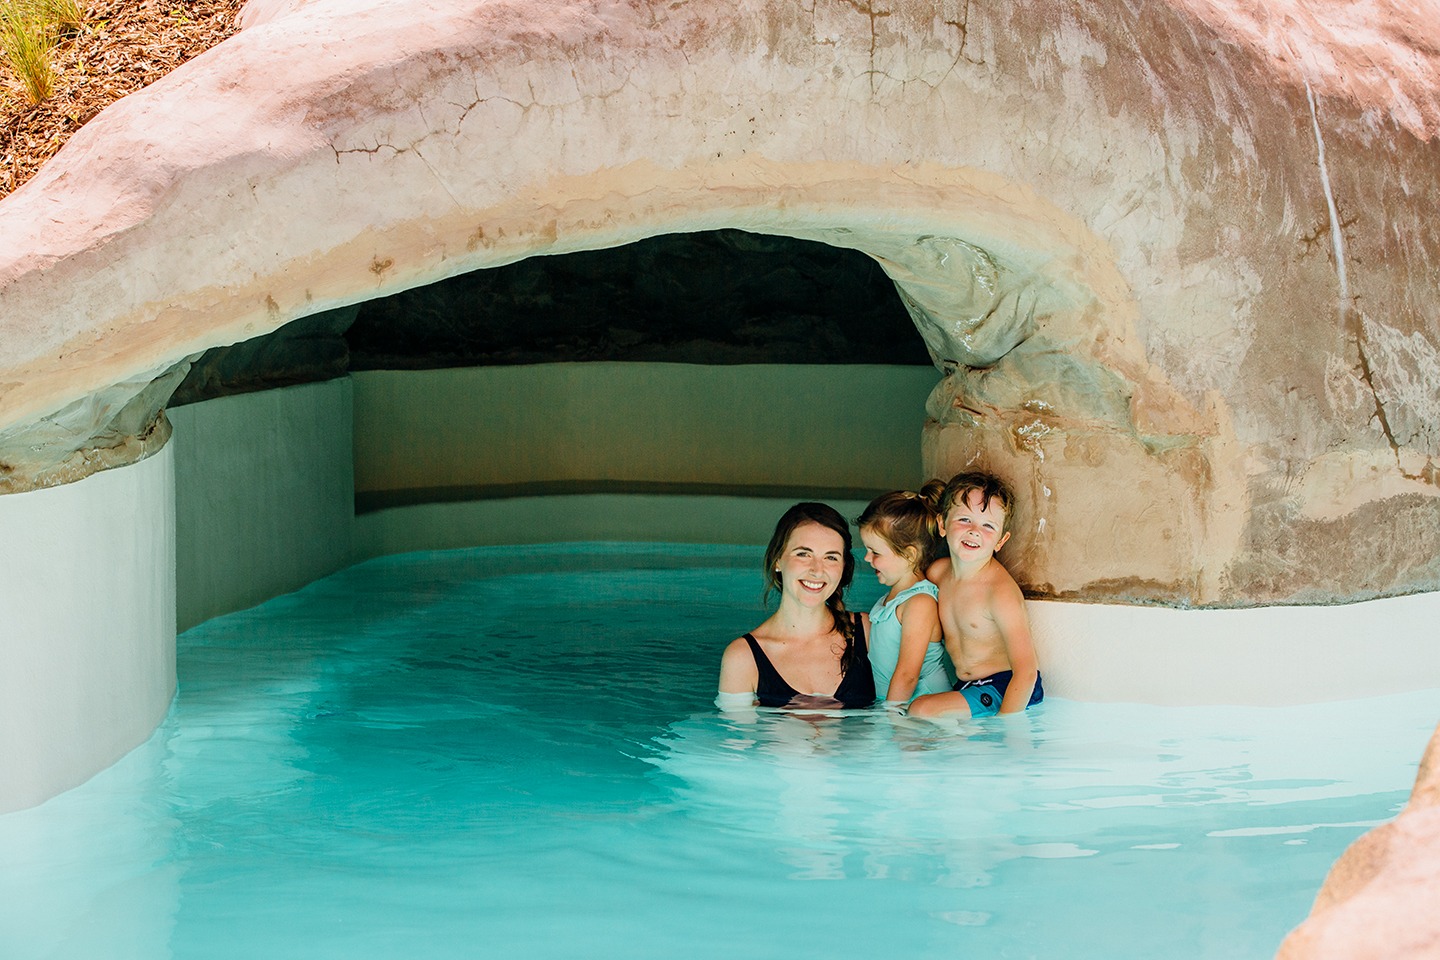 Experience Opuke Thermal Pools & Spa